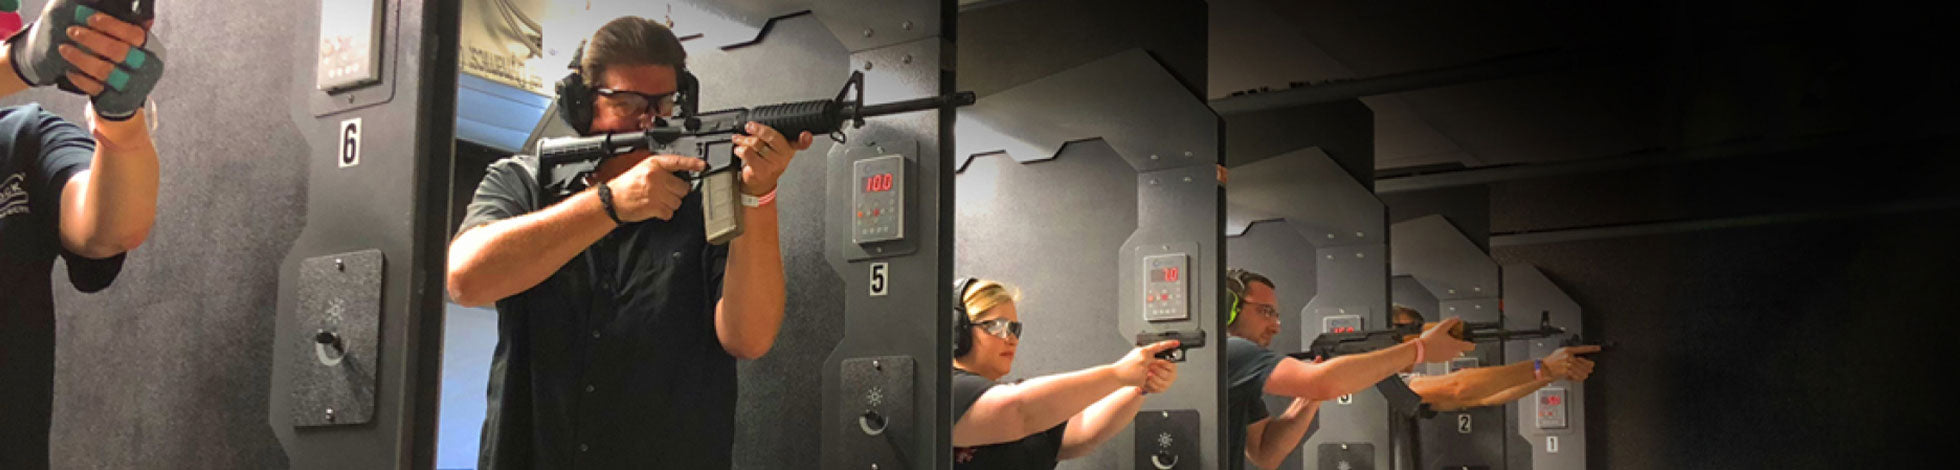 The Benefits of Training at a Gun Range